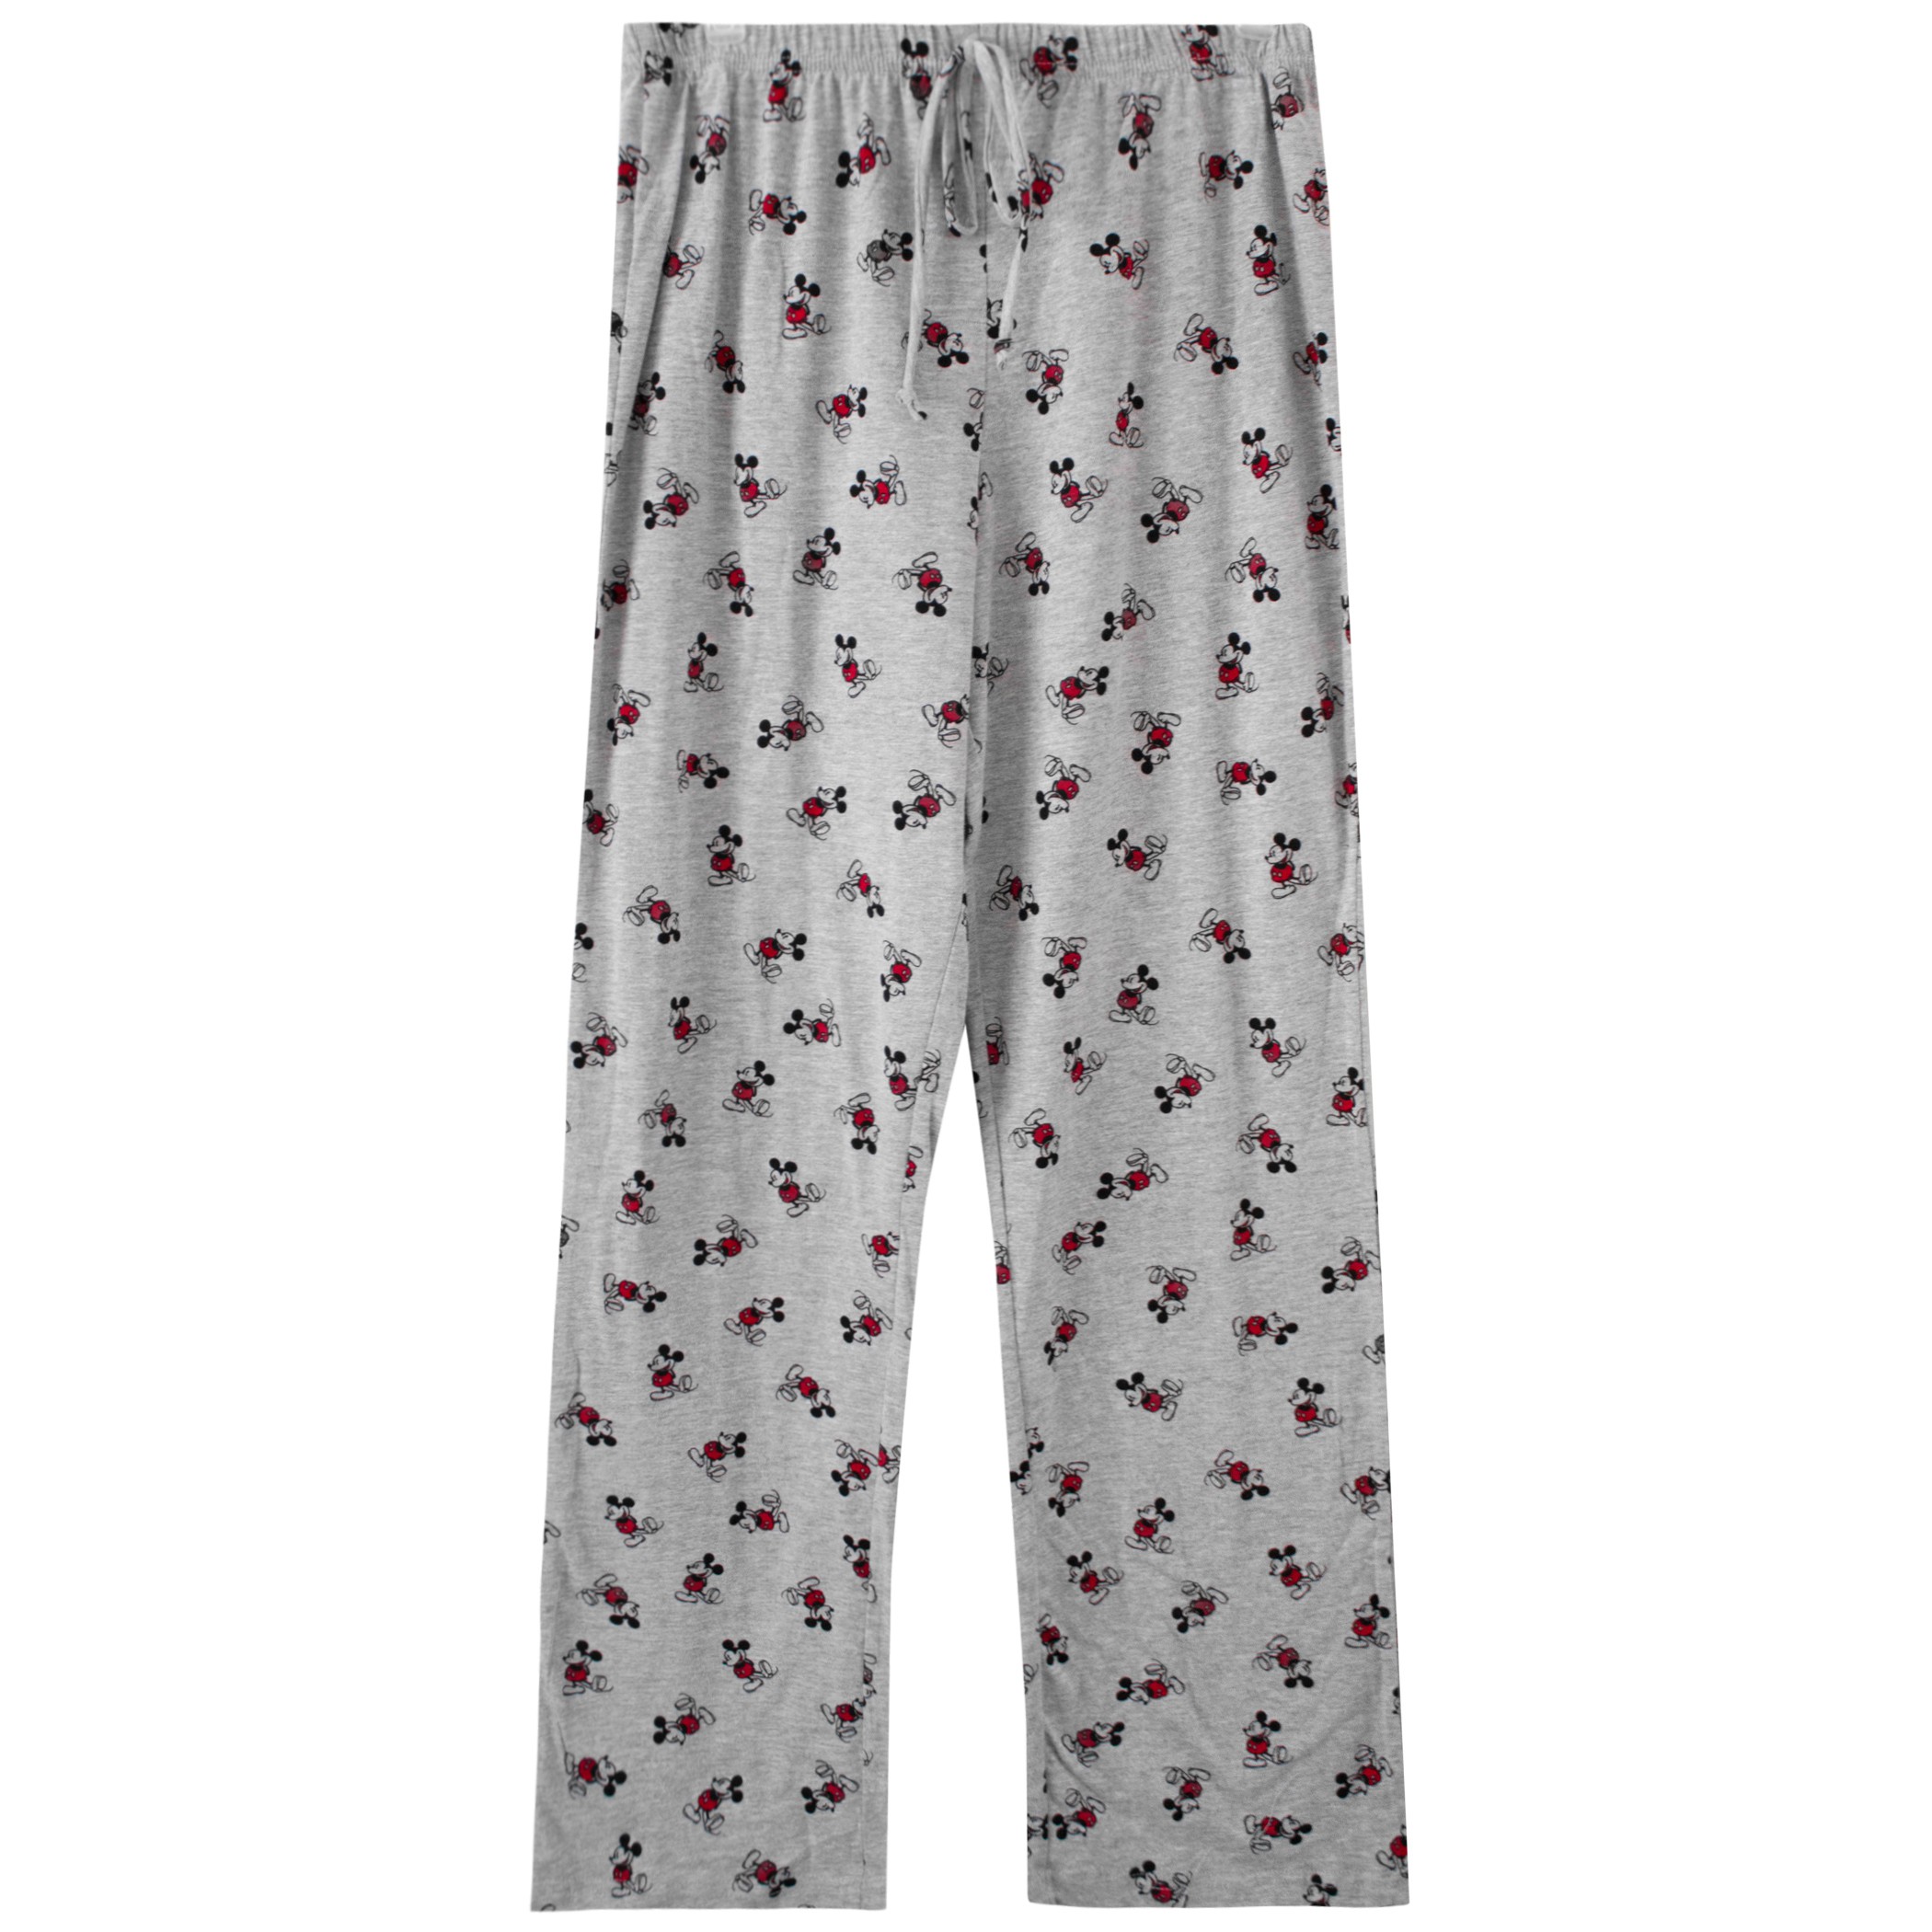 Grinch & Max Plush Men's Sleep Pants